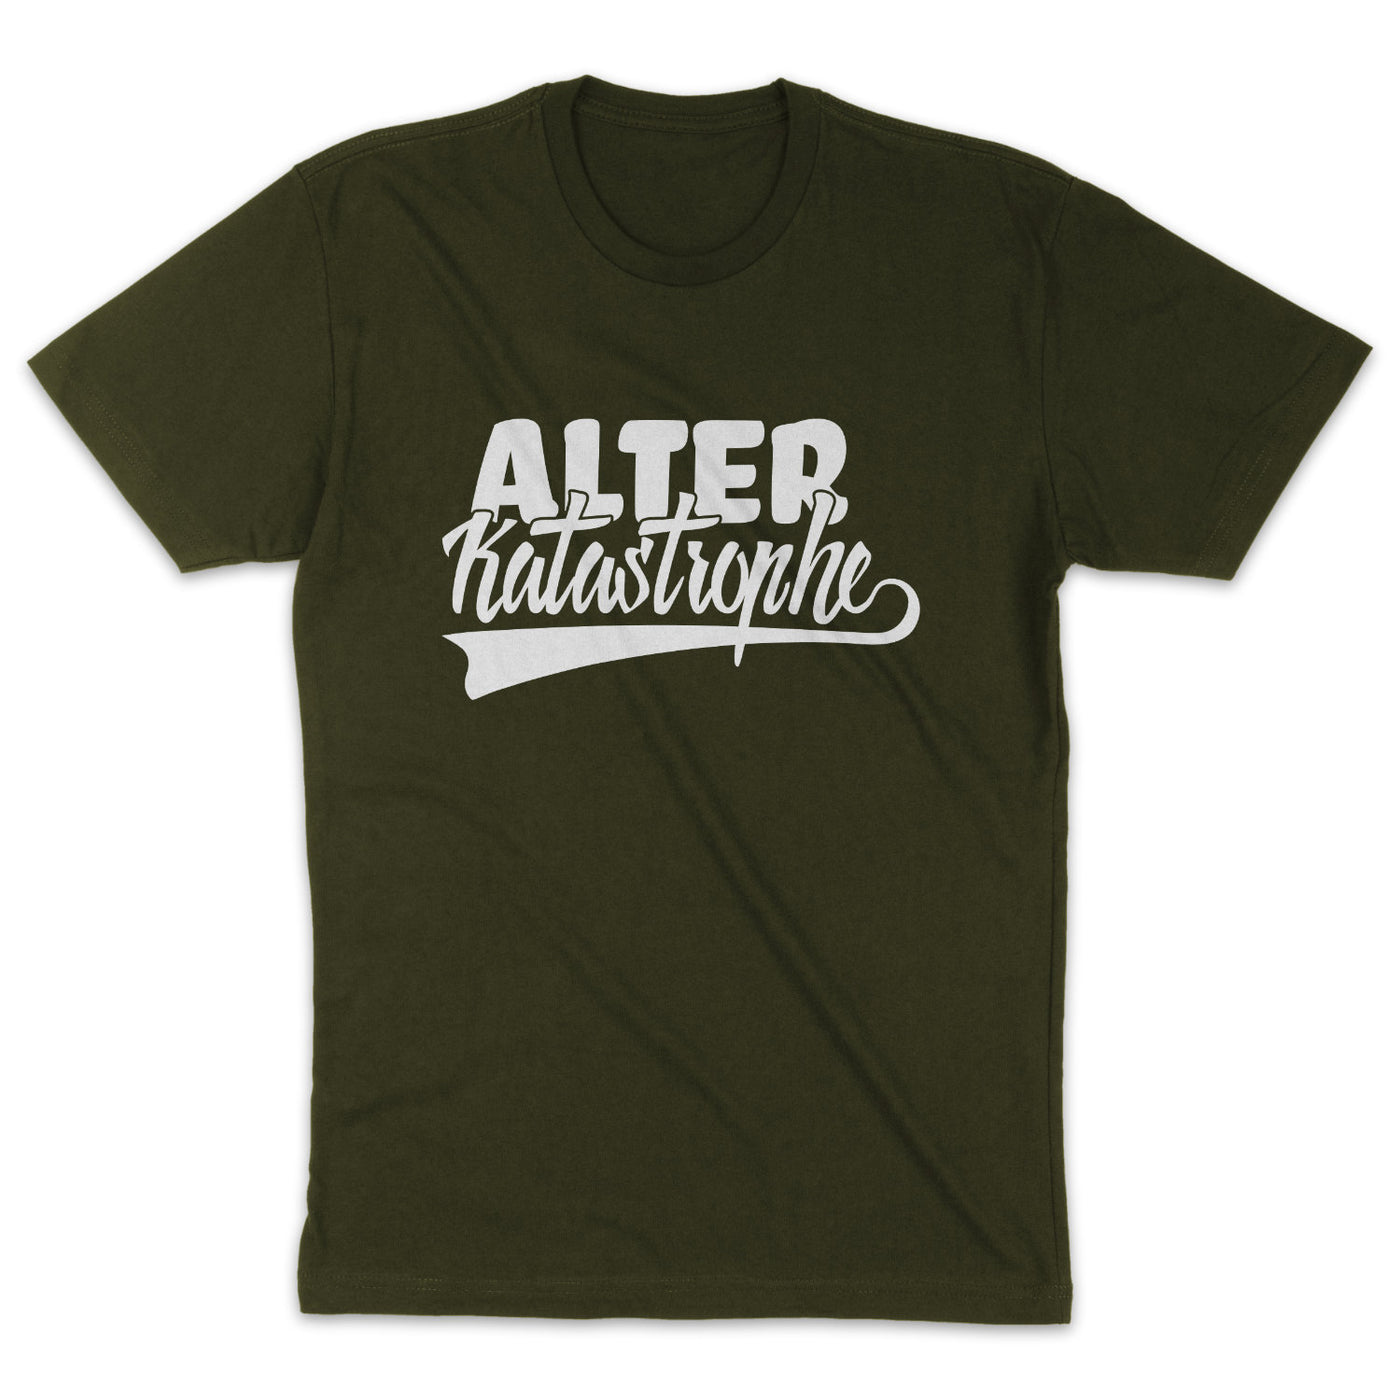 Alter Katastrophe Shirt Retro Vintage Kult Fun T-Shirt Sprüche